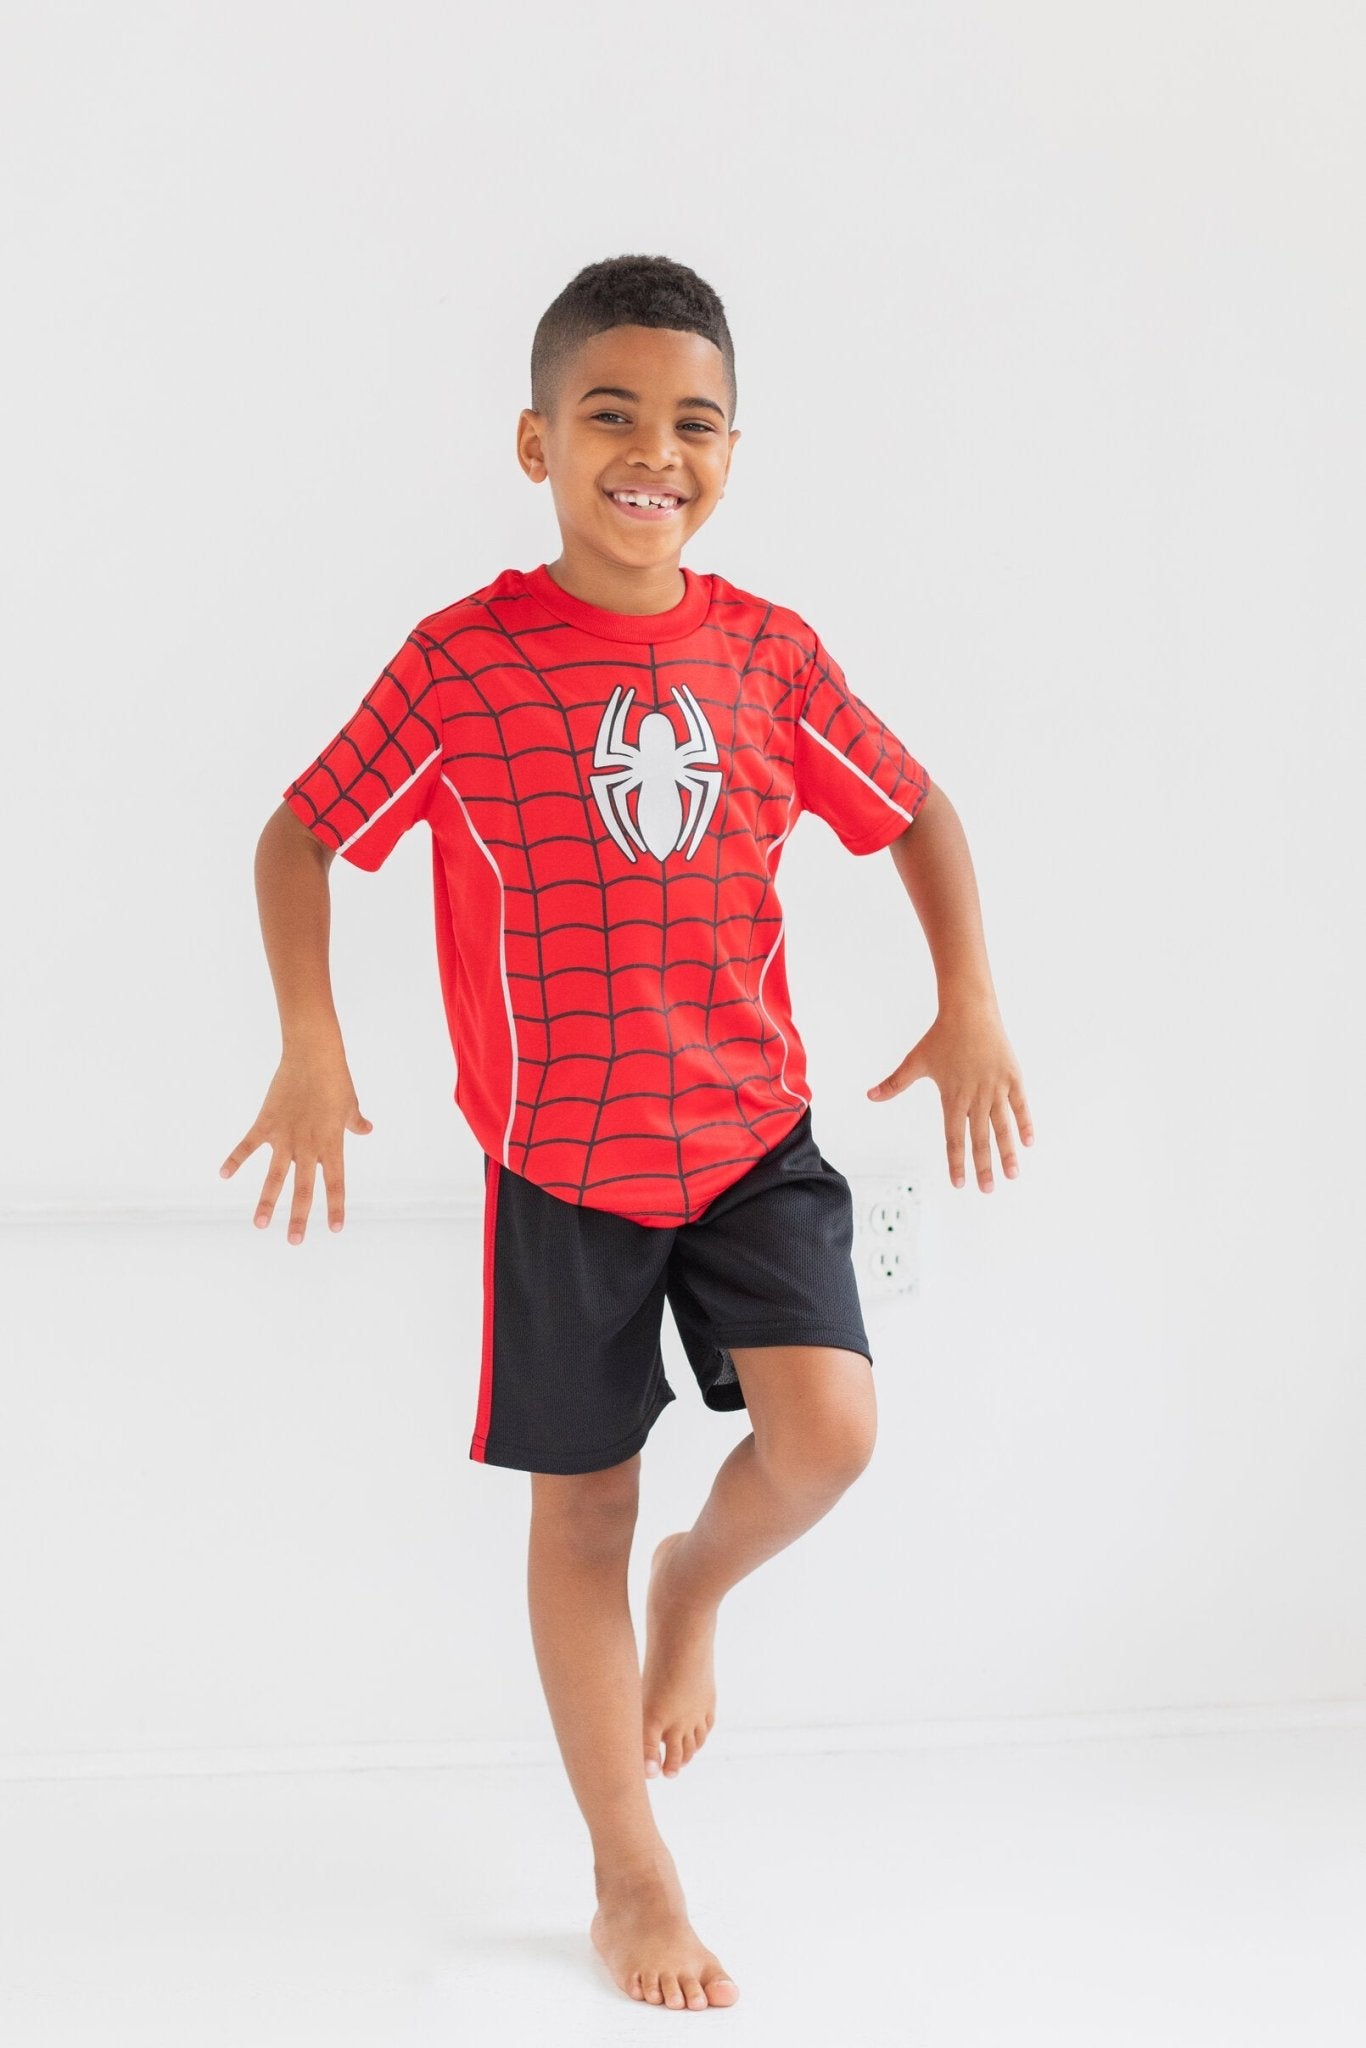 Marvel Spider - Man Athletic Pullover T - Shirt Mesh Shorts Outfit Set - imagikids